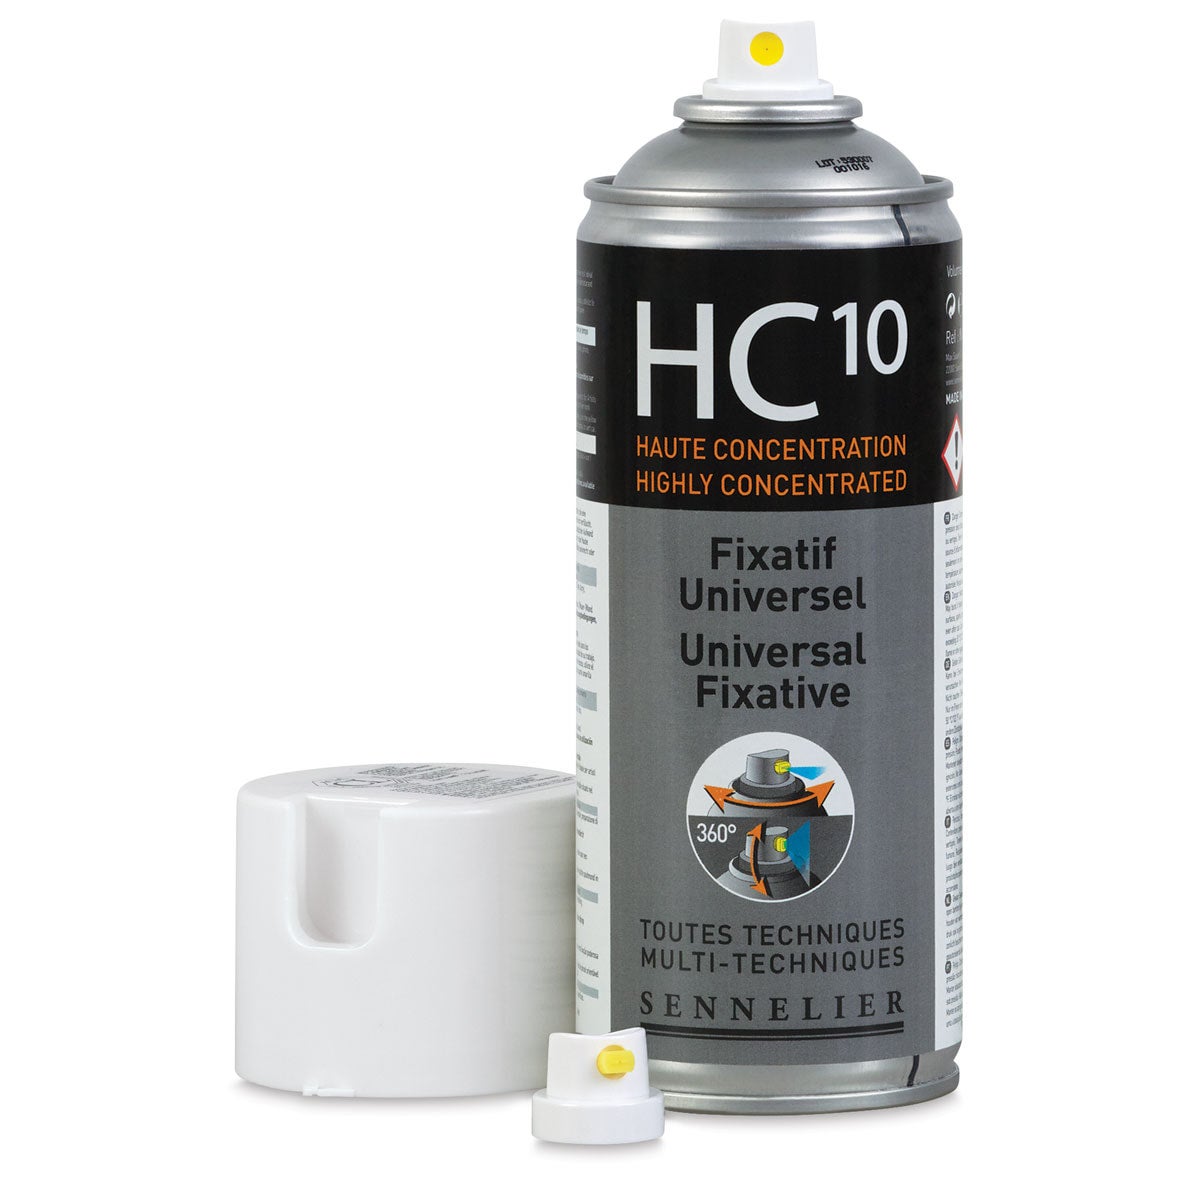 Sennelier HC10 Fixative Spray at New River Art & Fiber